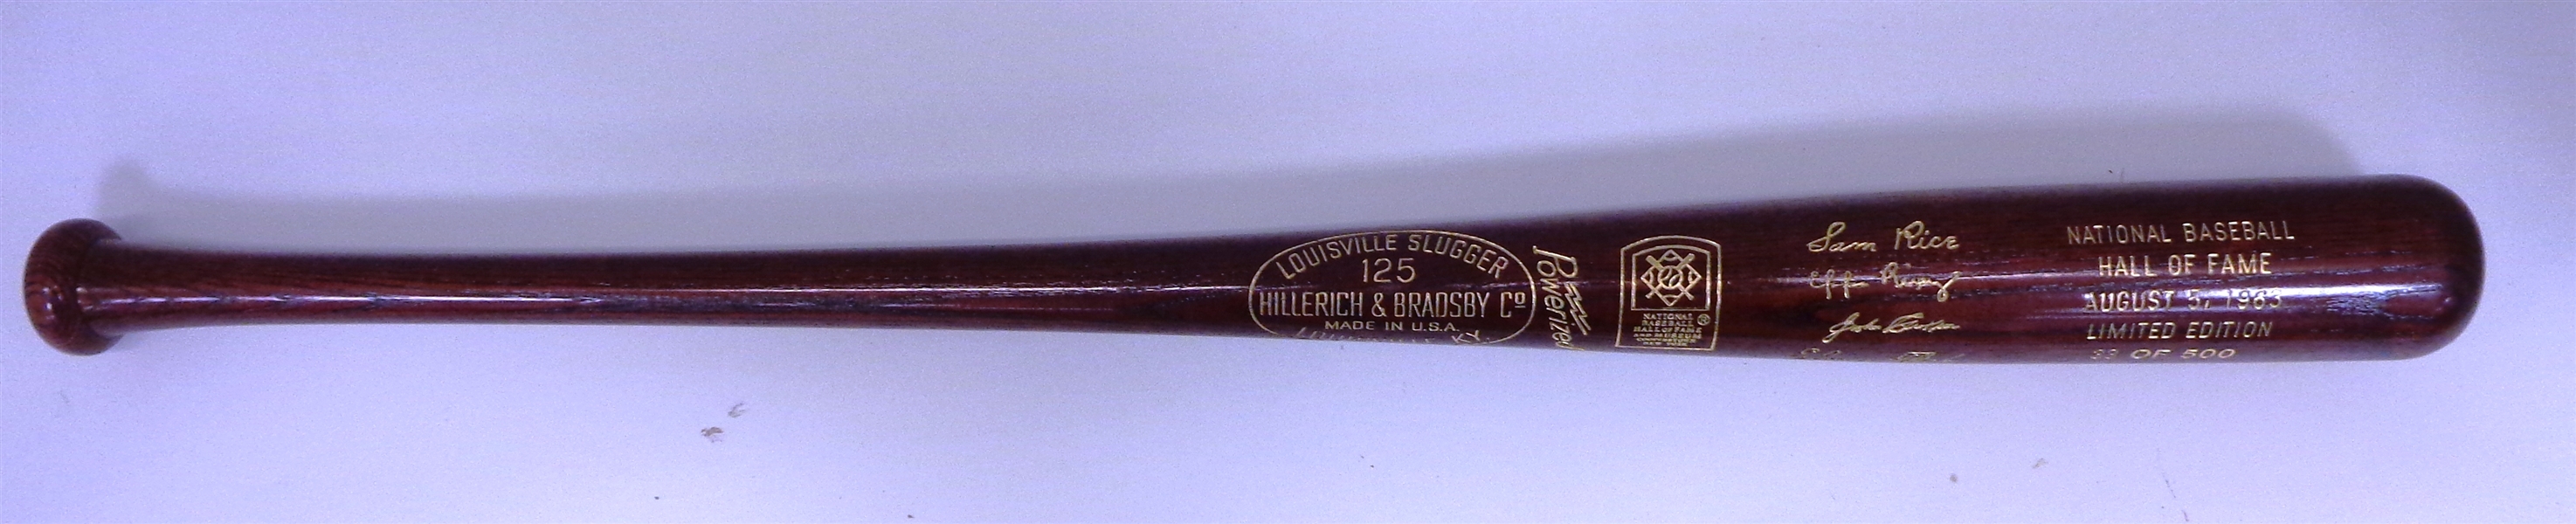 1963 Baseball Hall of Fame Commemorative Bat